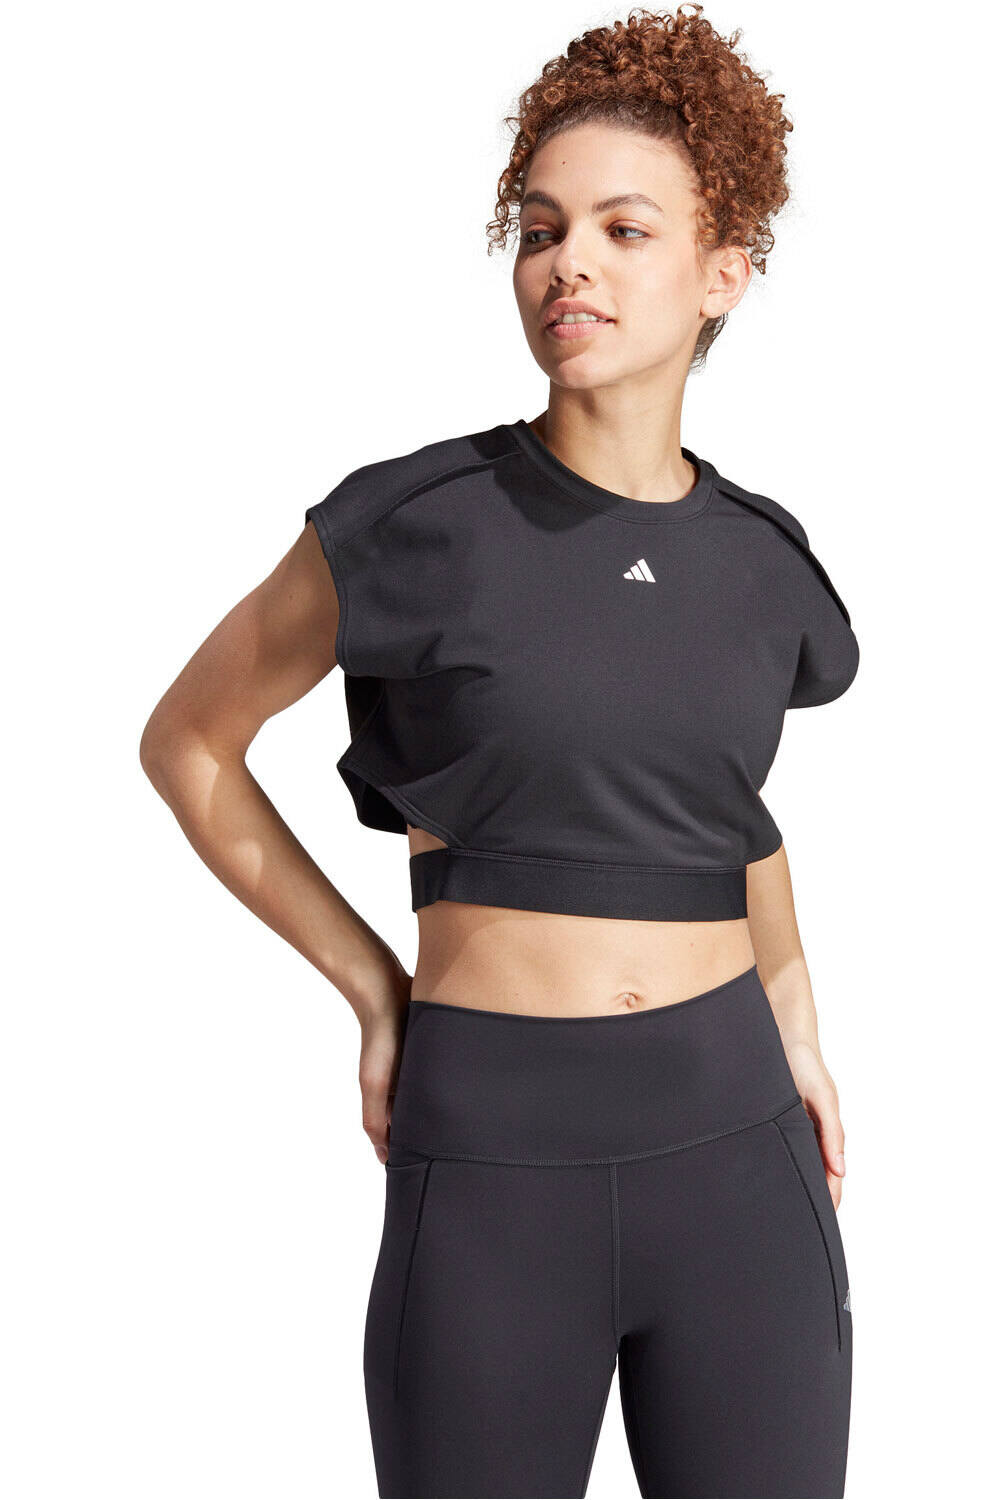 adidas camiseta tirantes fitness mujer POWER CROP T vista frontal